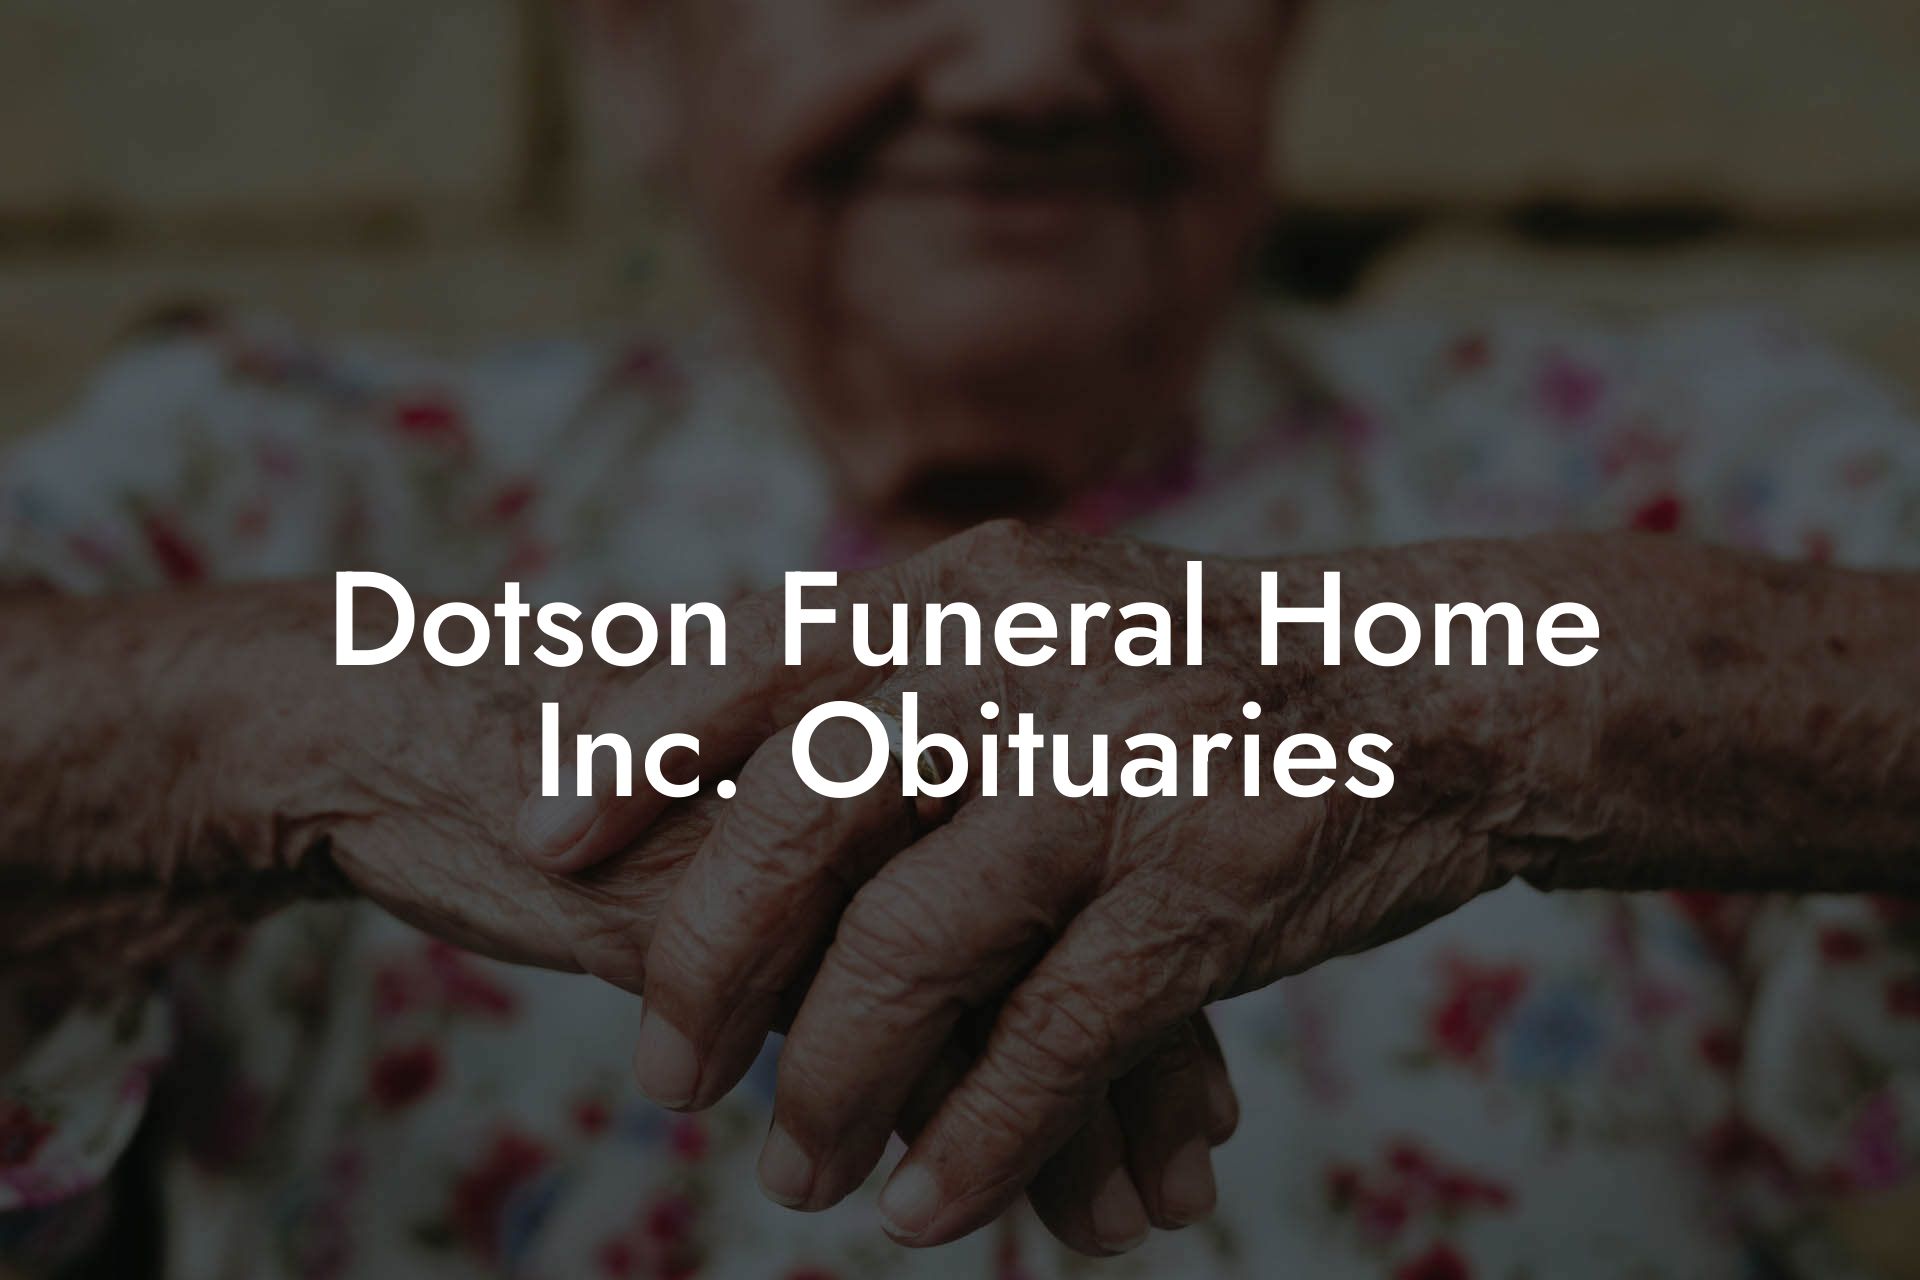 Dotson Funeral Home Inc. Obituaries